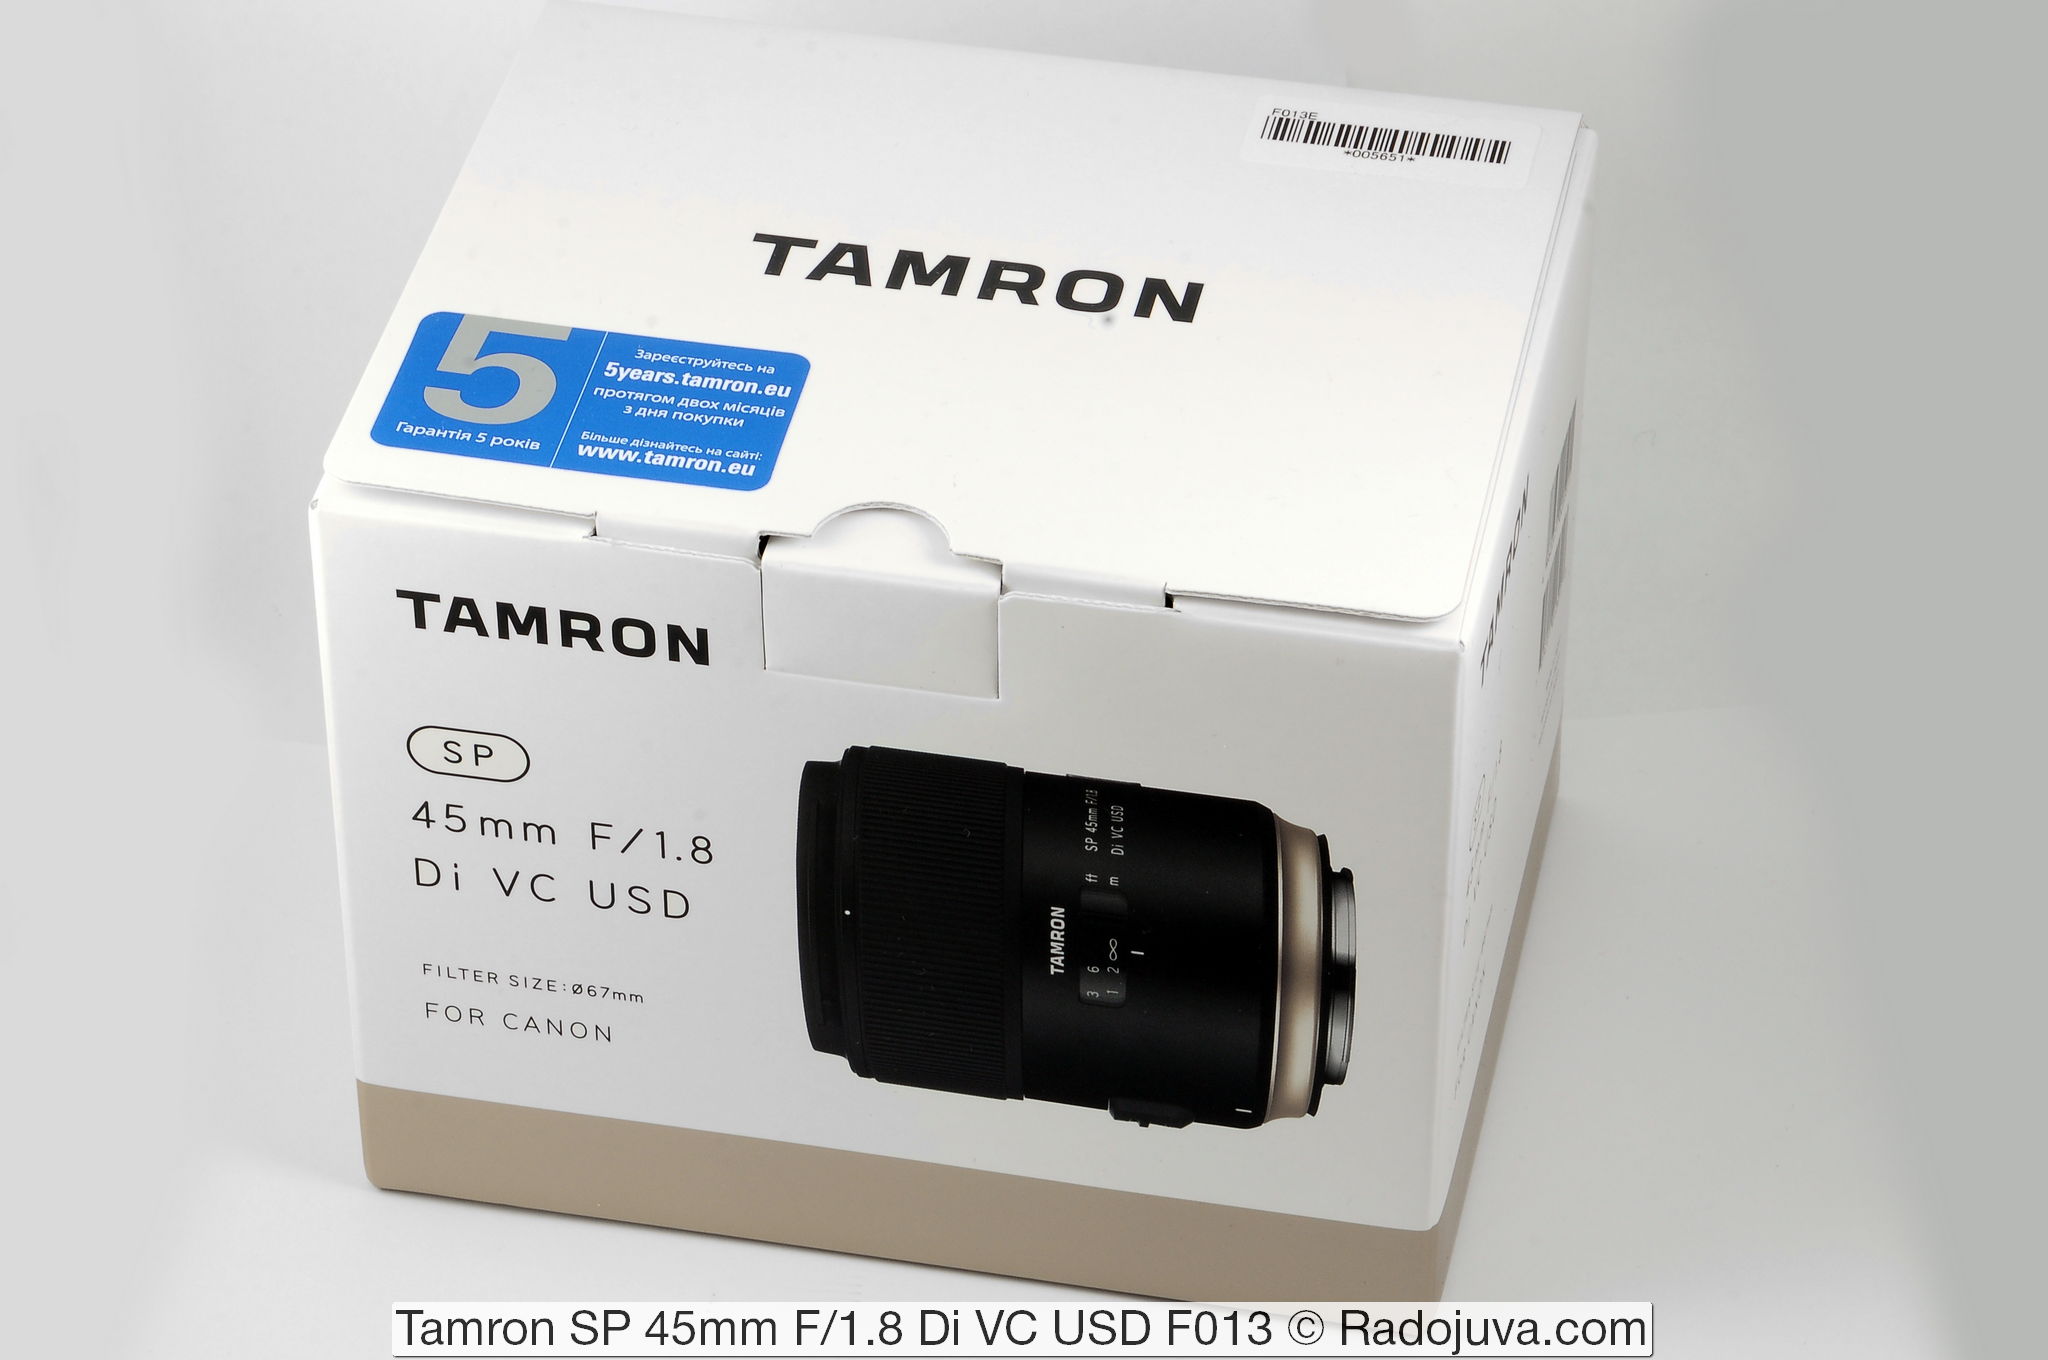 Tamron SP 45mm F/1.8 Di VC USD F013